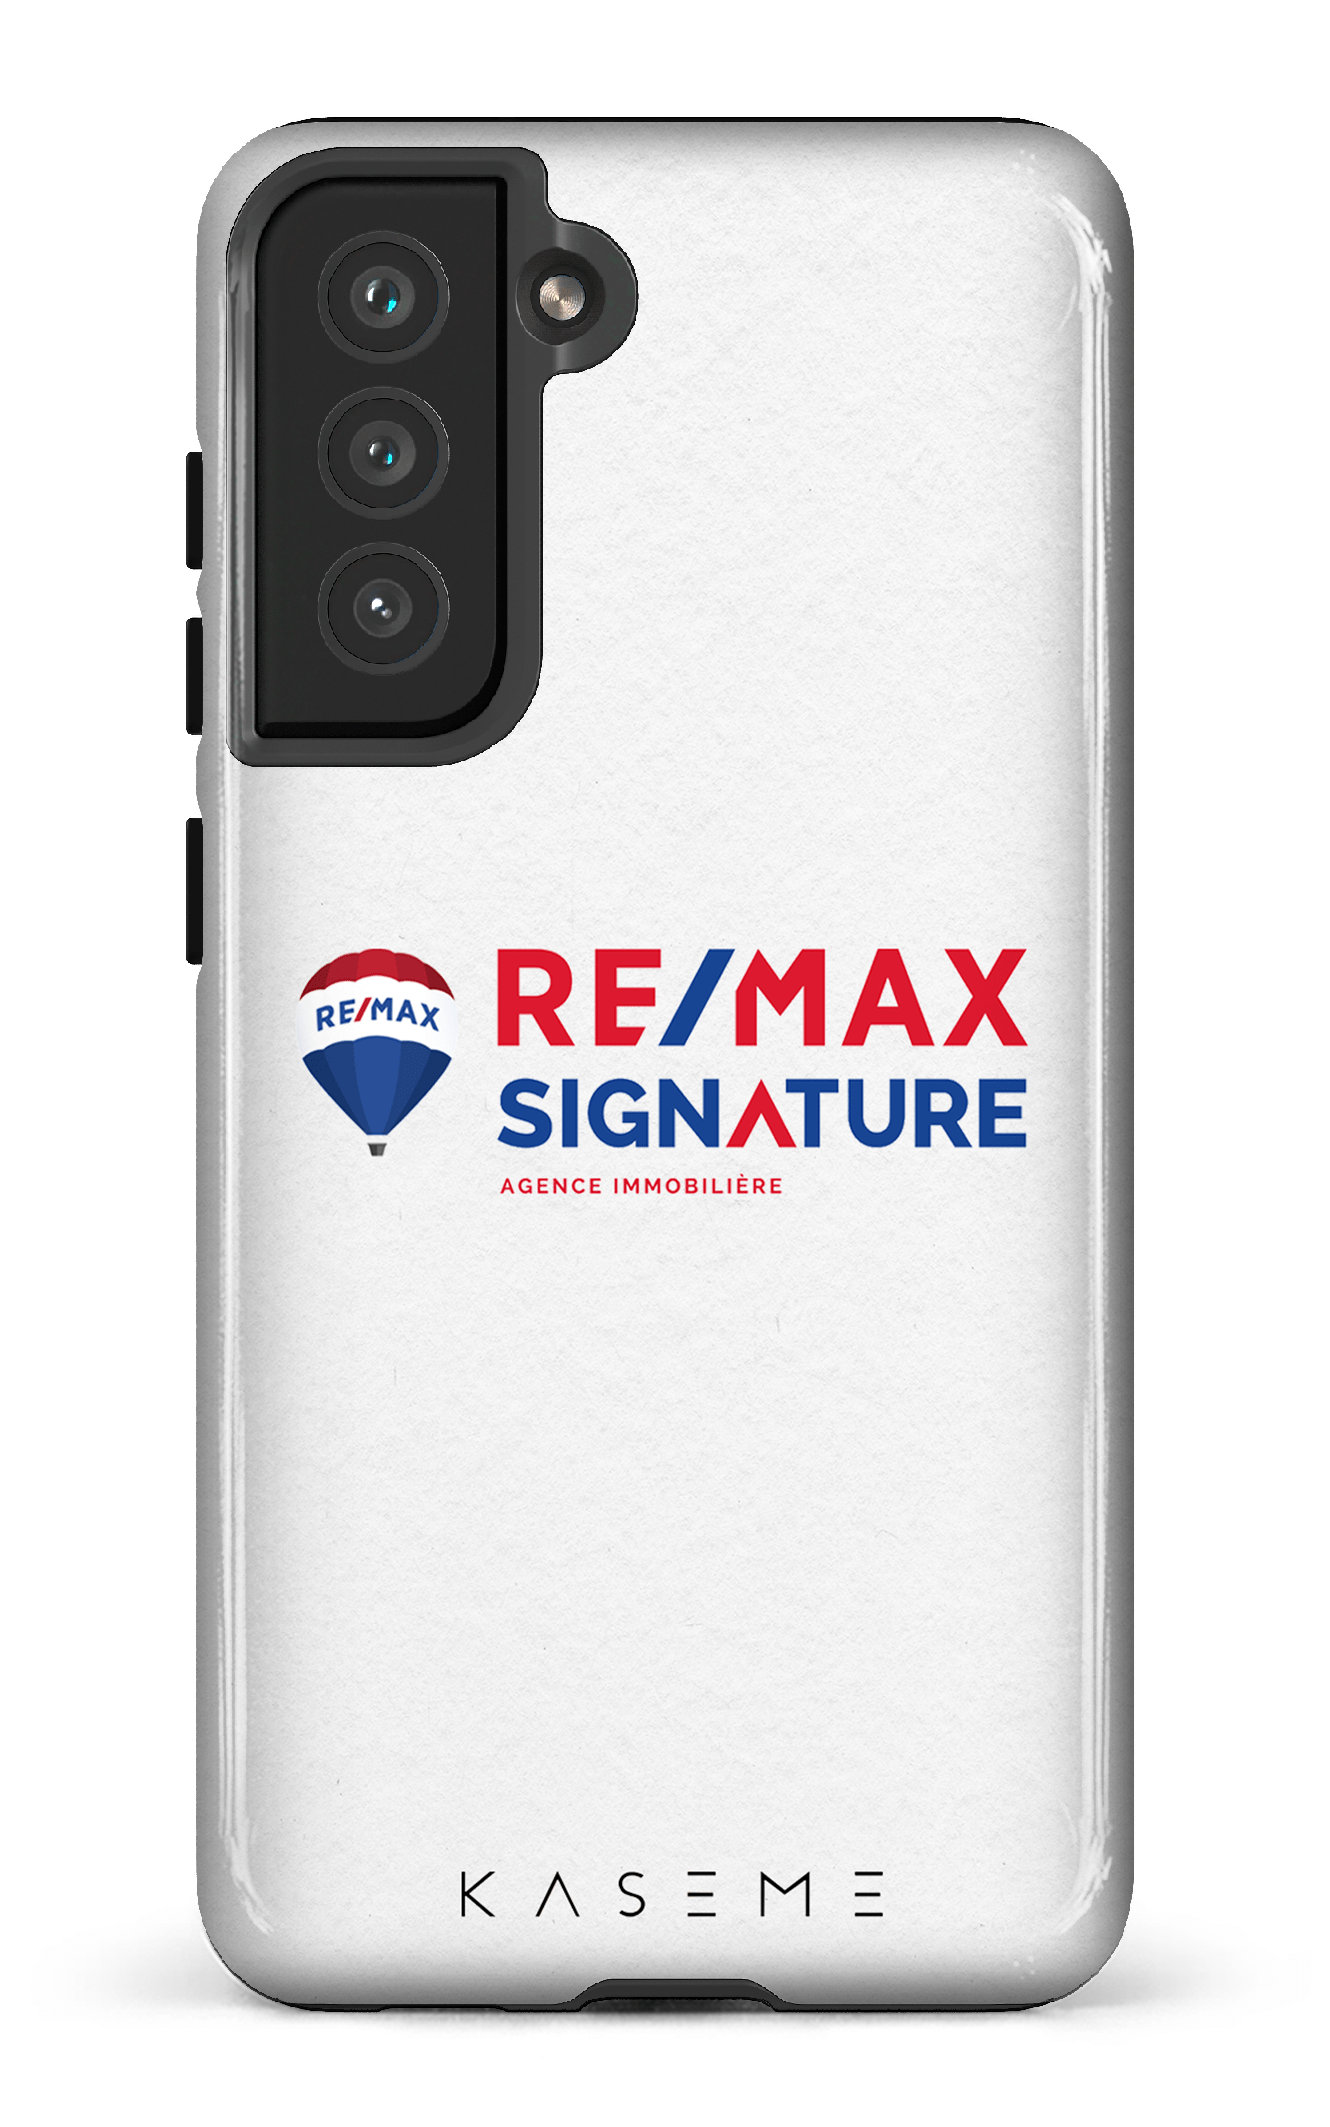 Remax Signature Blanc - Galaxy S21 FE